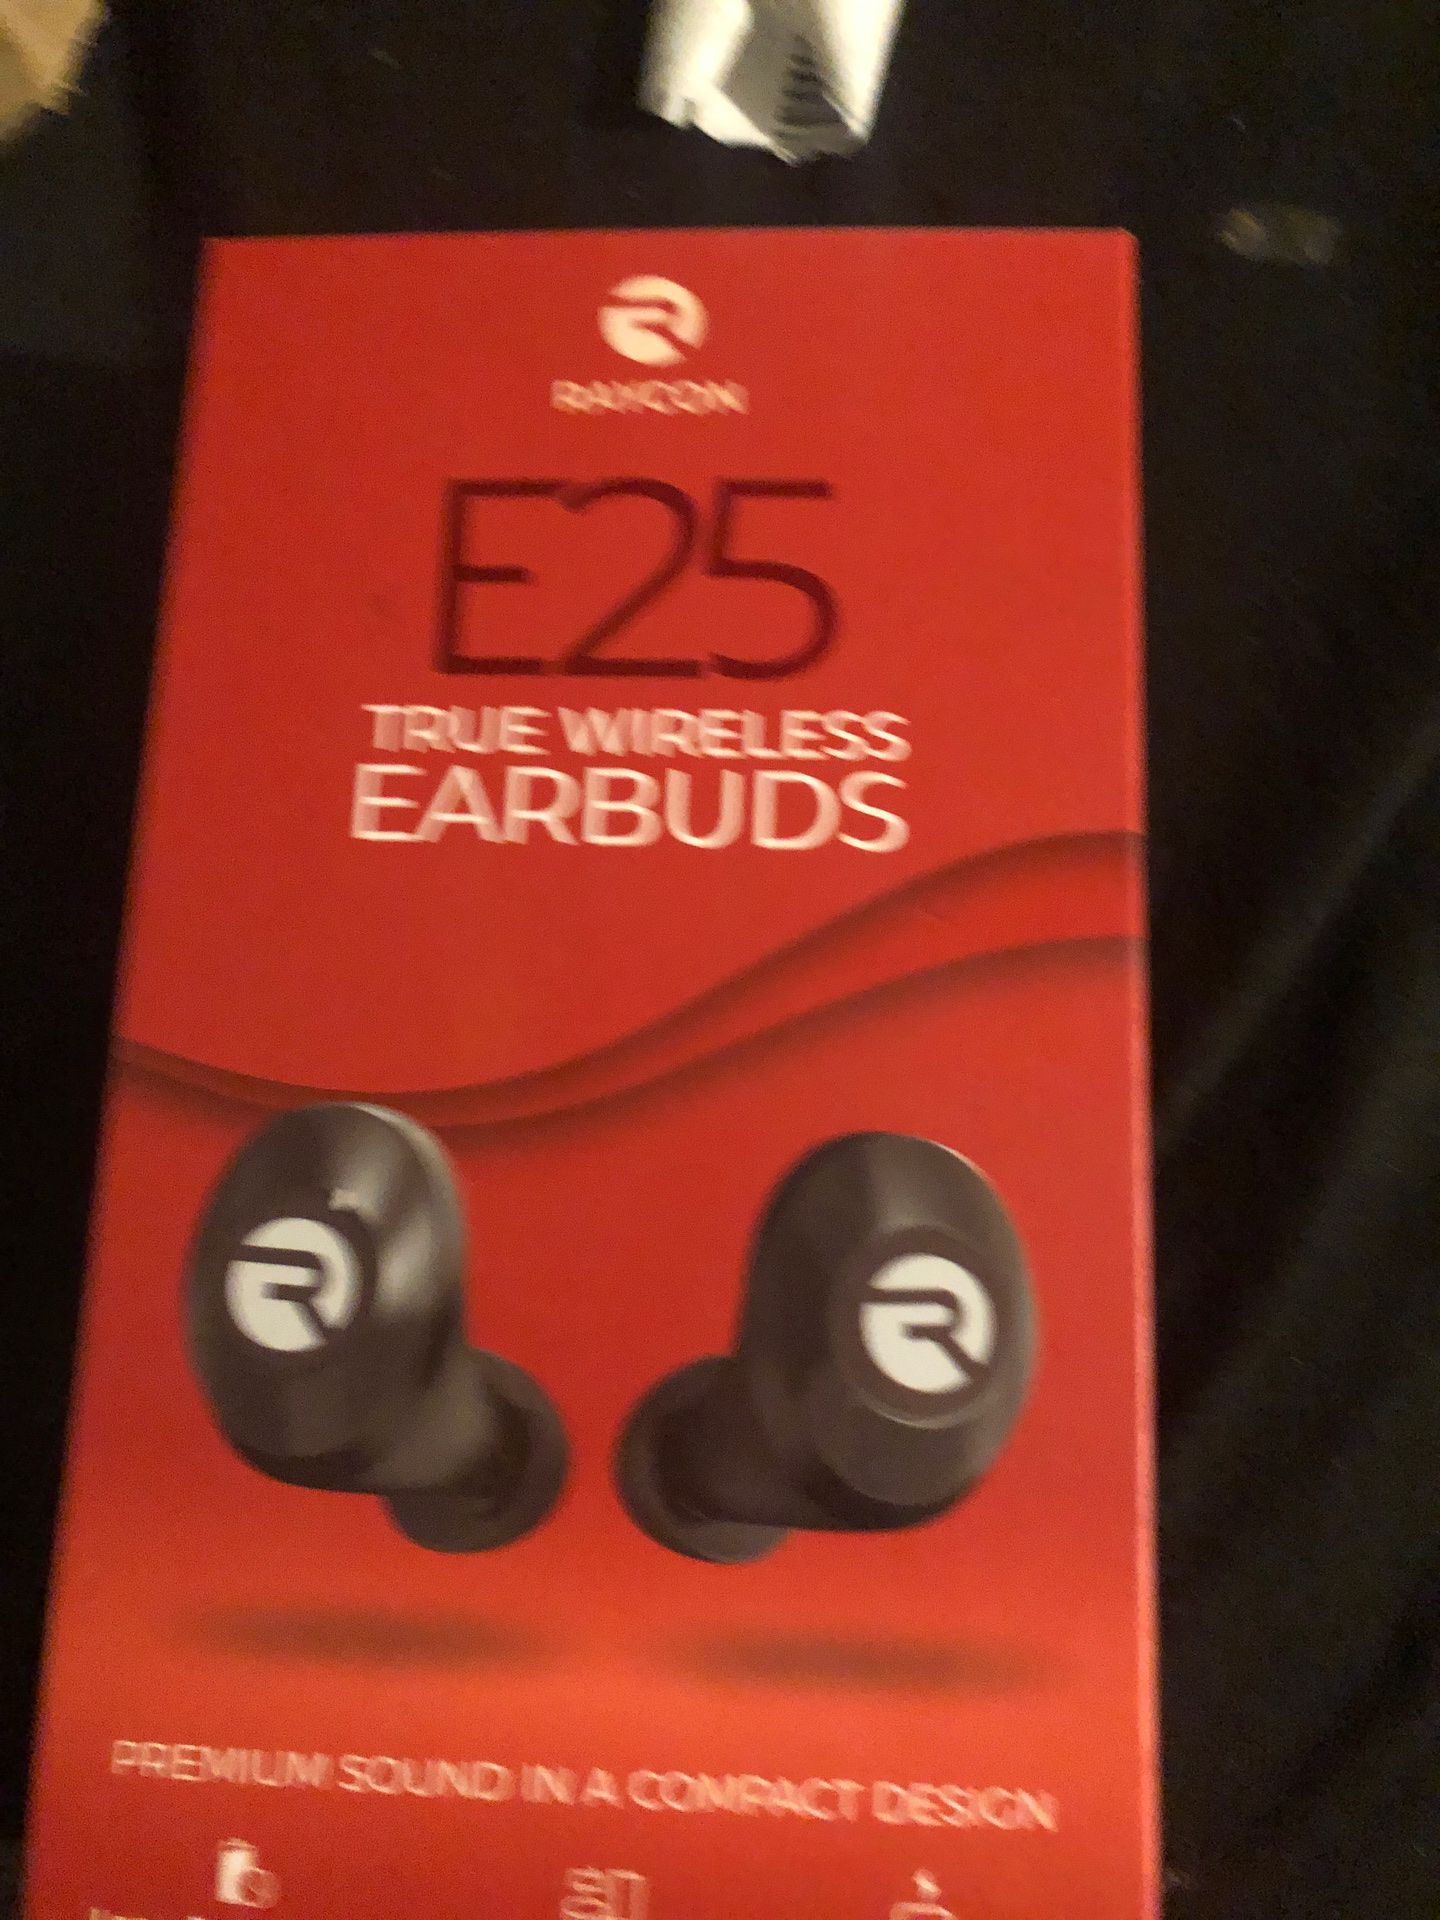 Raycon E25 true wireless earbuds